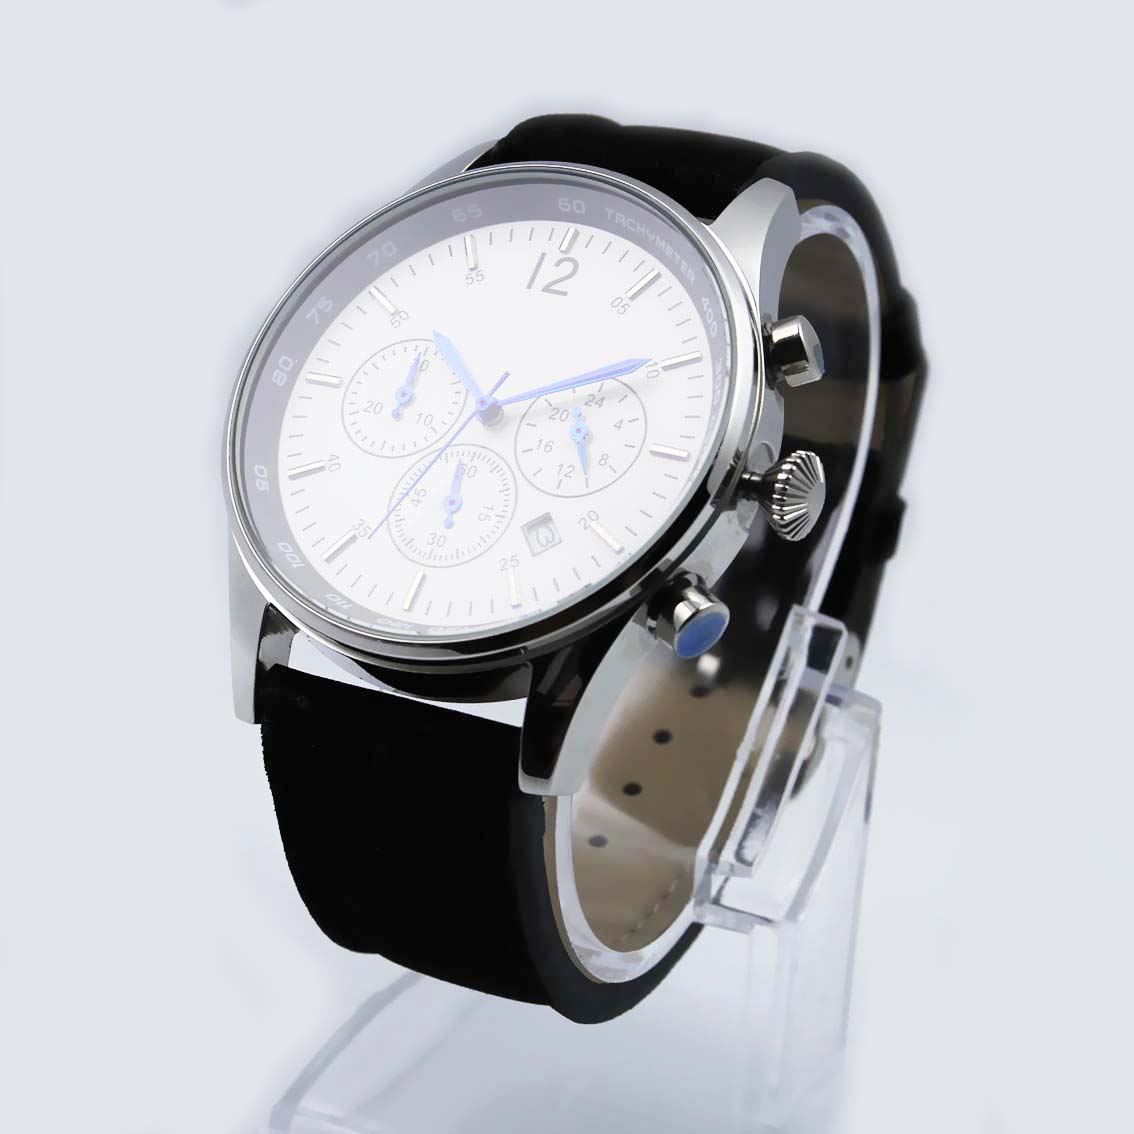 #02068Men's wristwatch quartz analog leather strap watch